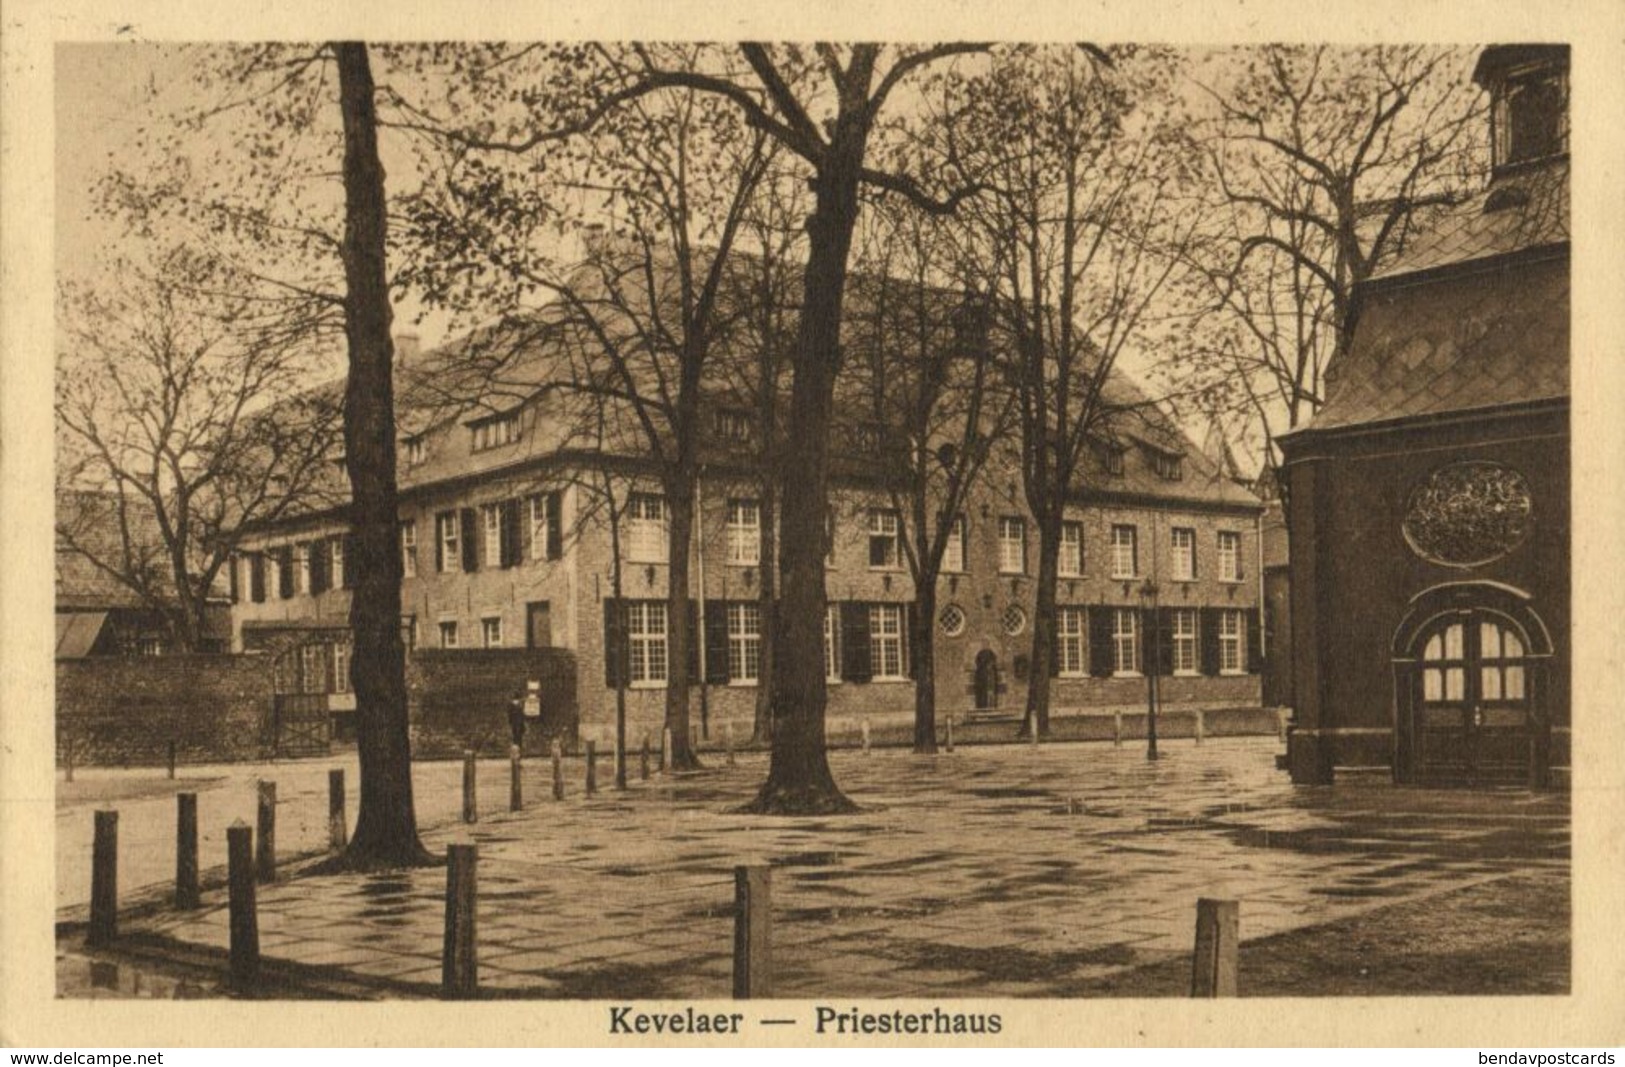 KEVELAER, Priesterhaus (1910s) AK (2) - Kevelaer